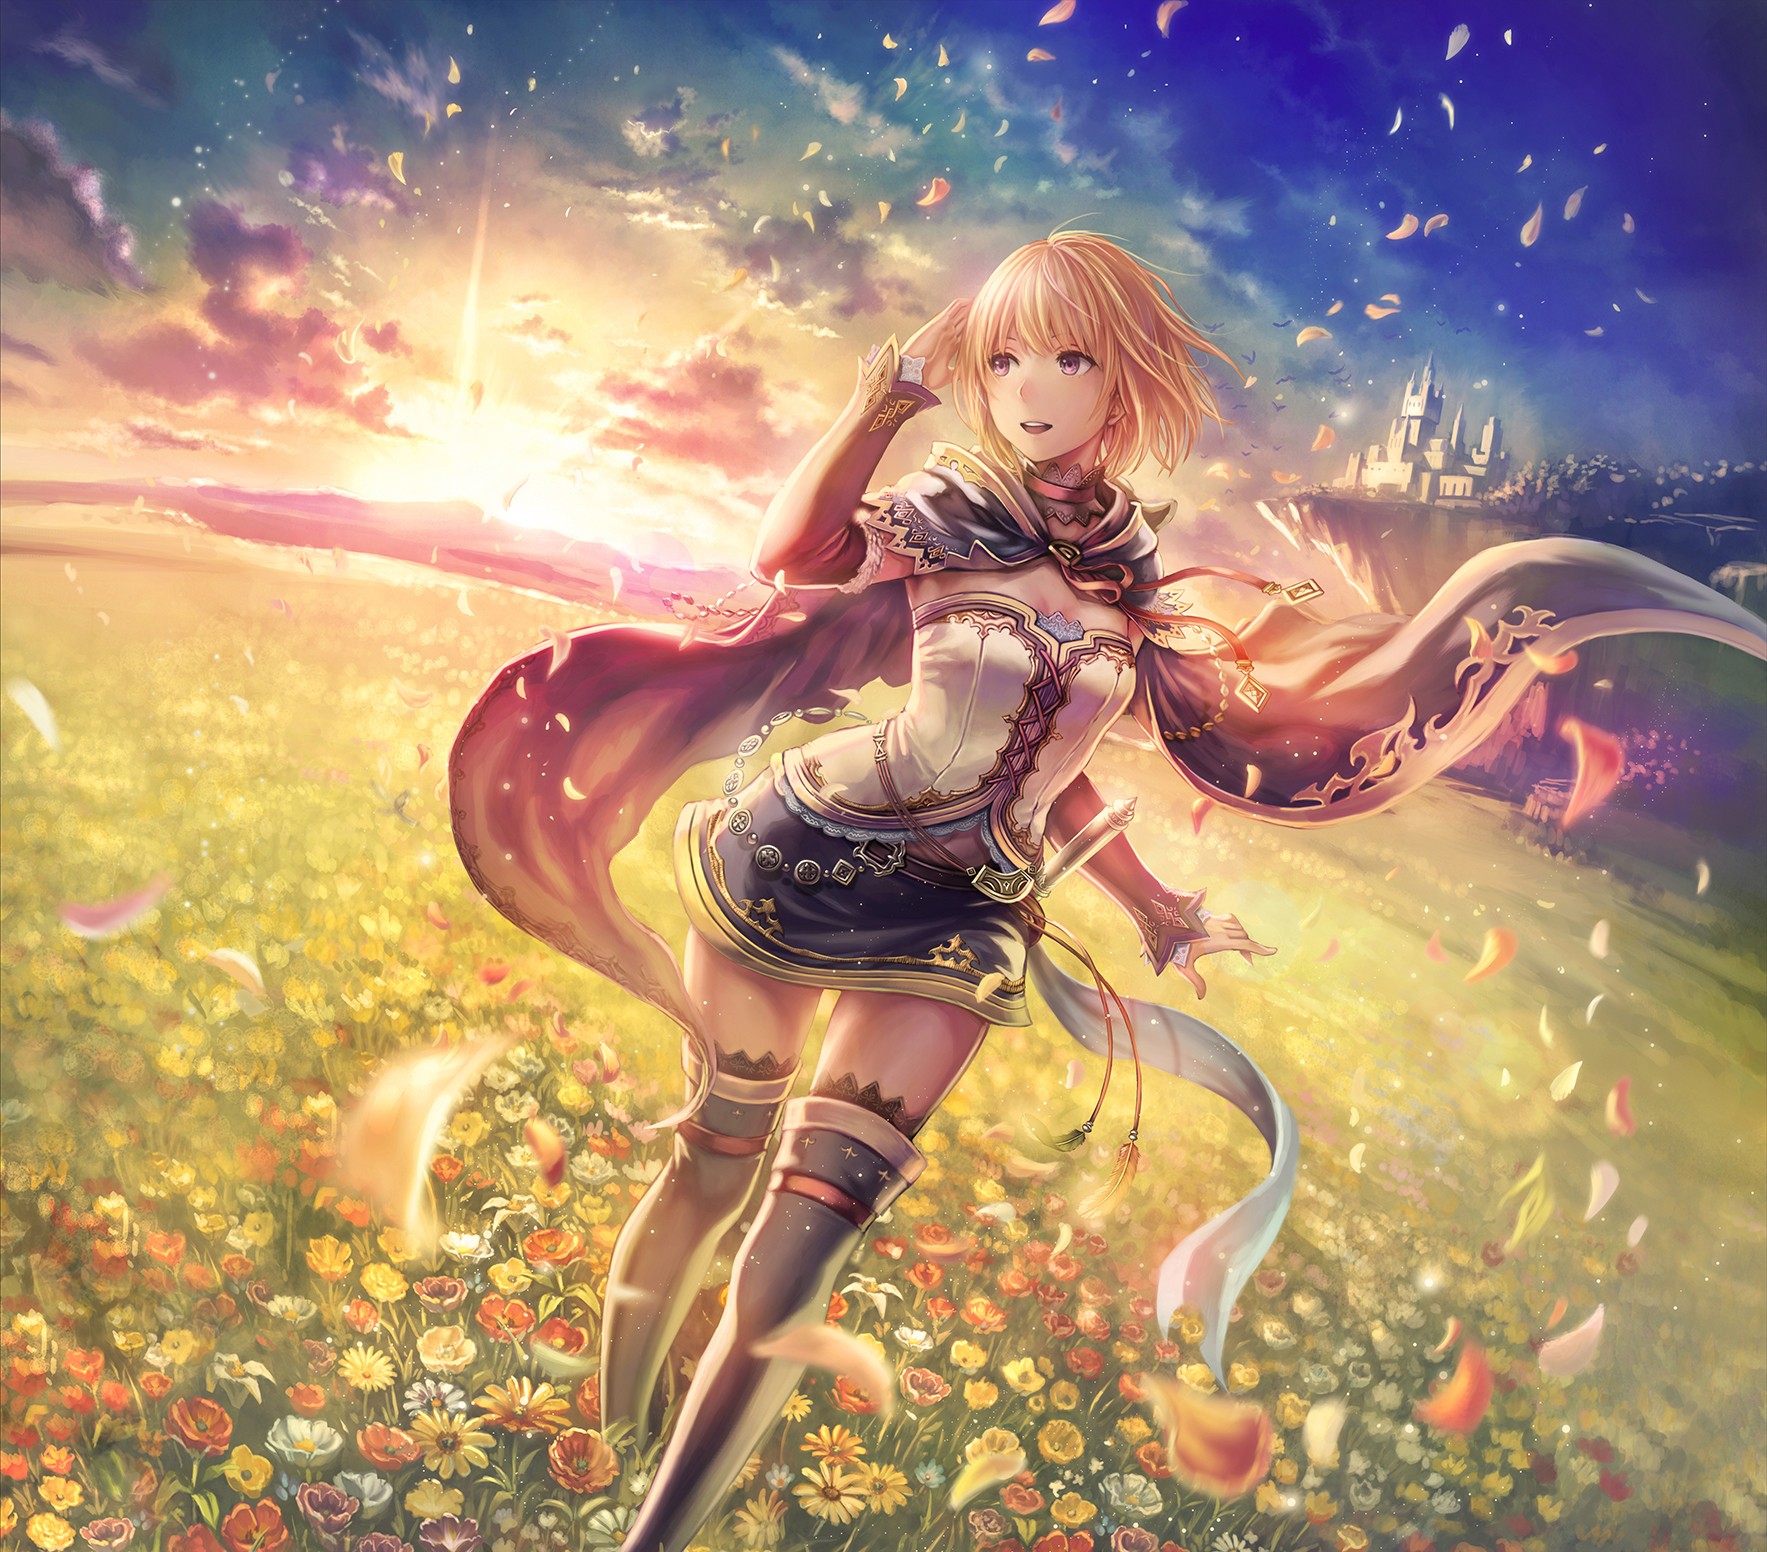 Anime 1767x1552 thigh-highs original characters anime fantasy art fantasy girl field flowers plants blonde sky sunlight women outdoors outdoors Pixiv